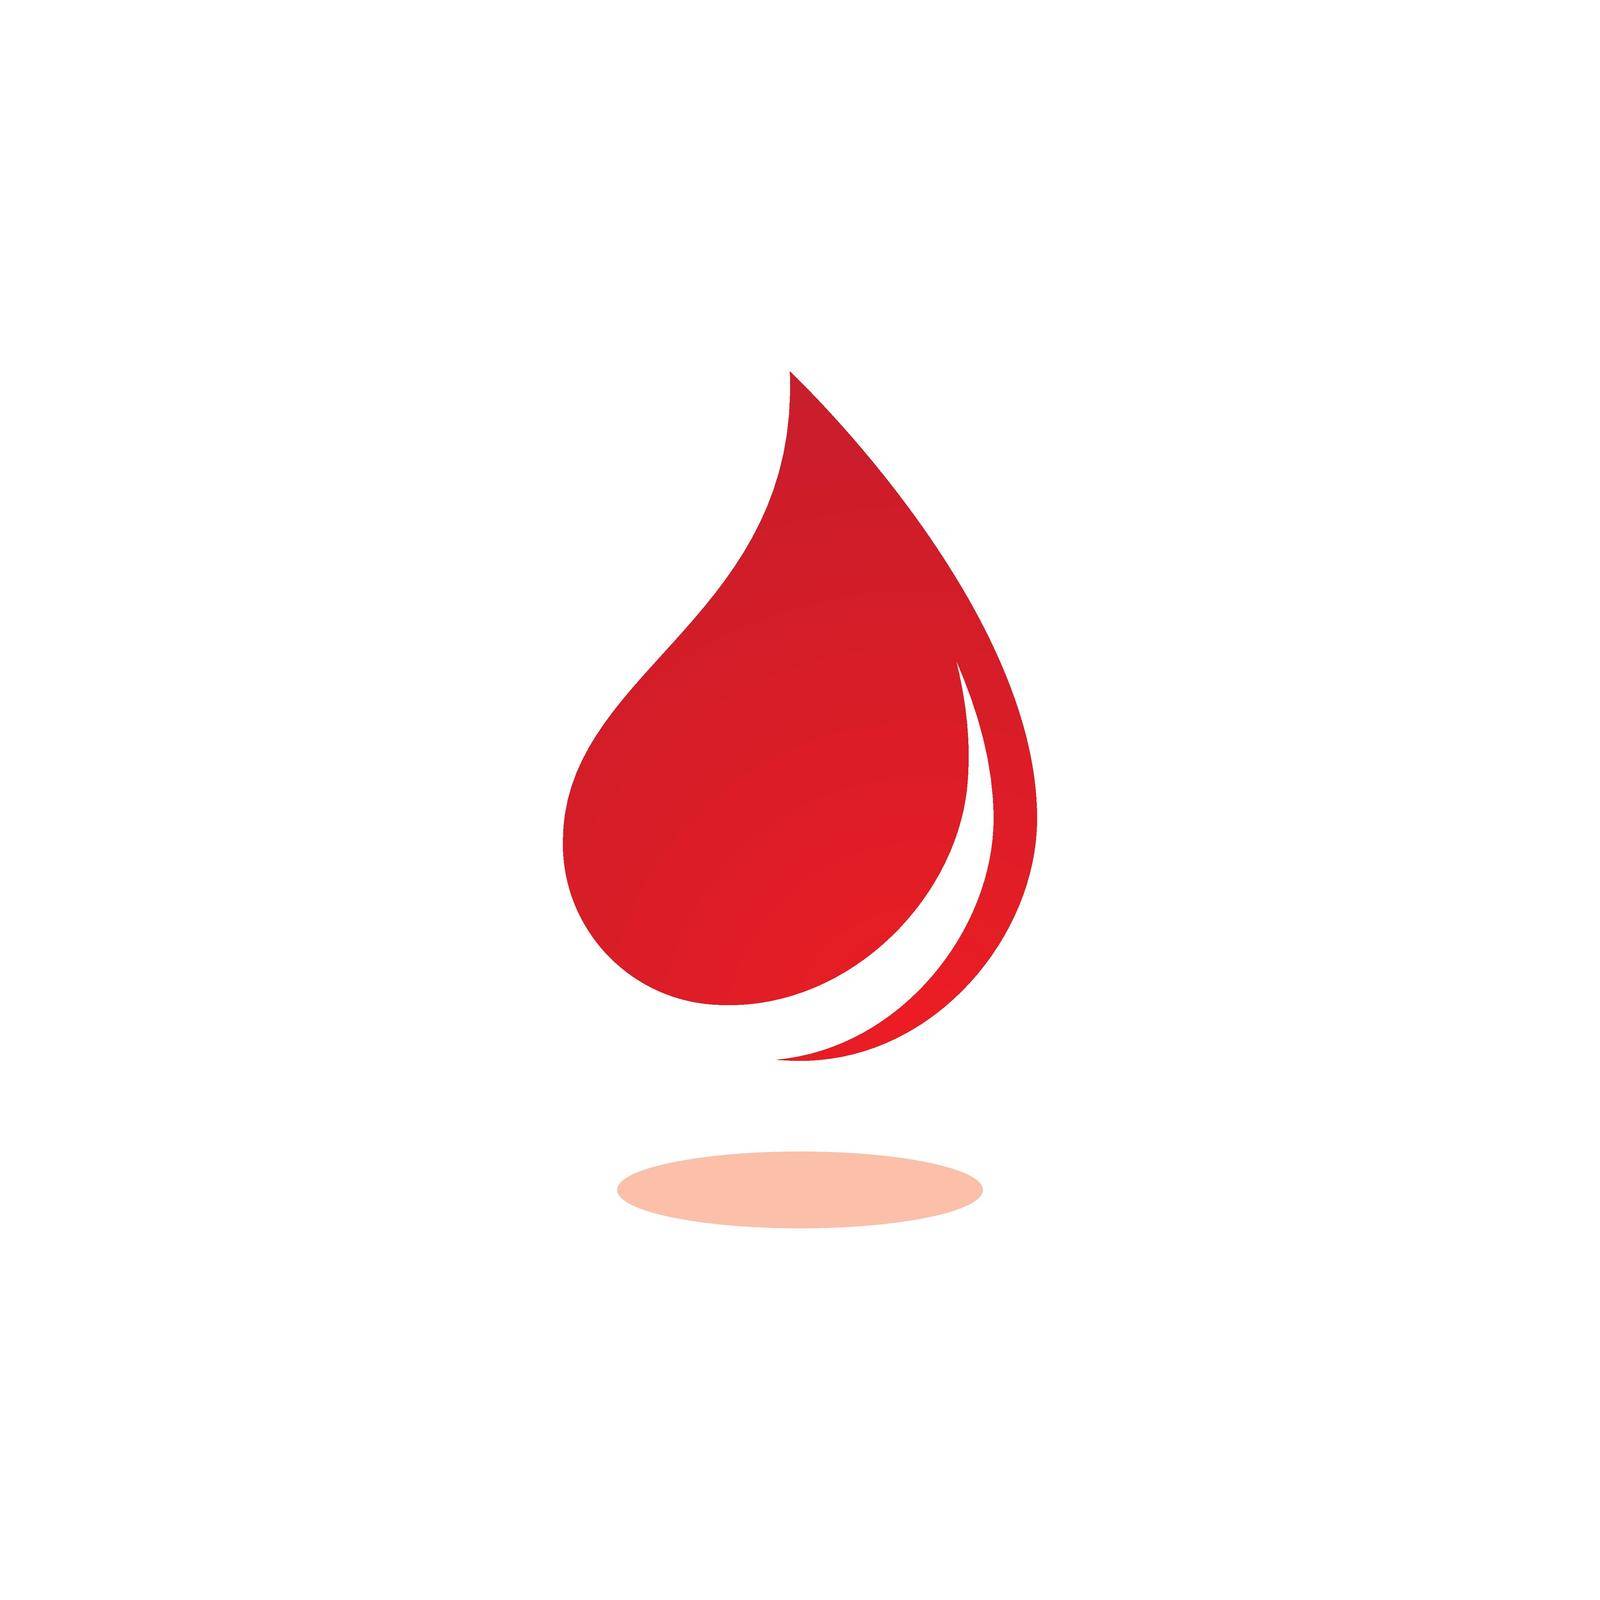 Blood ilustration logo by awk